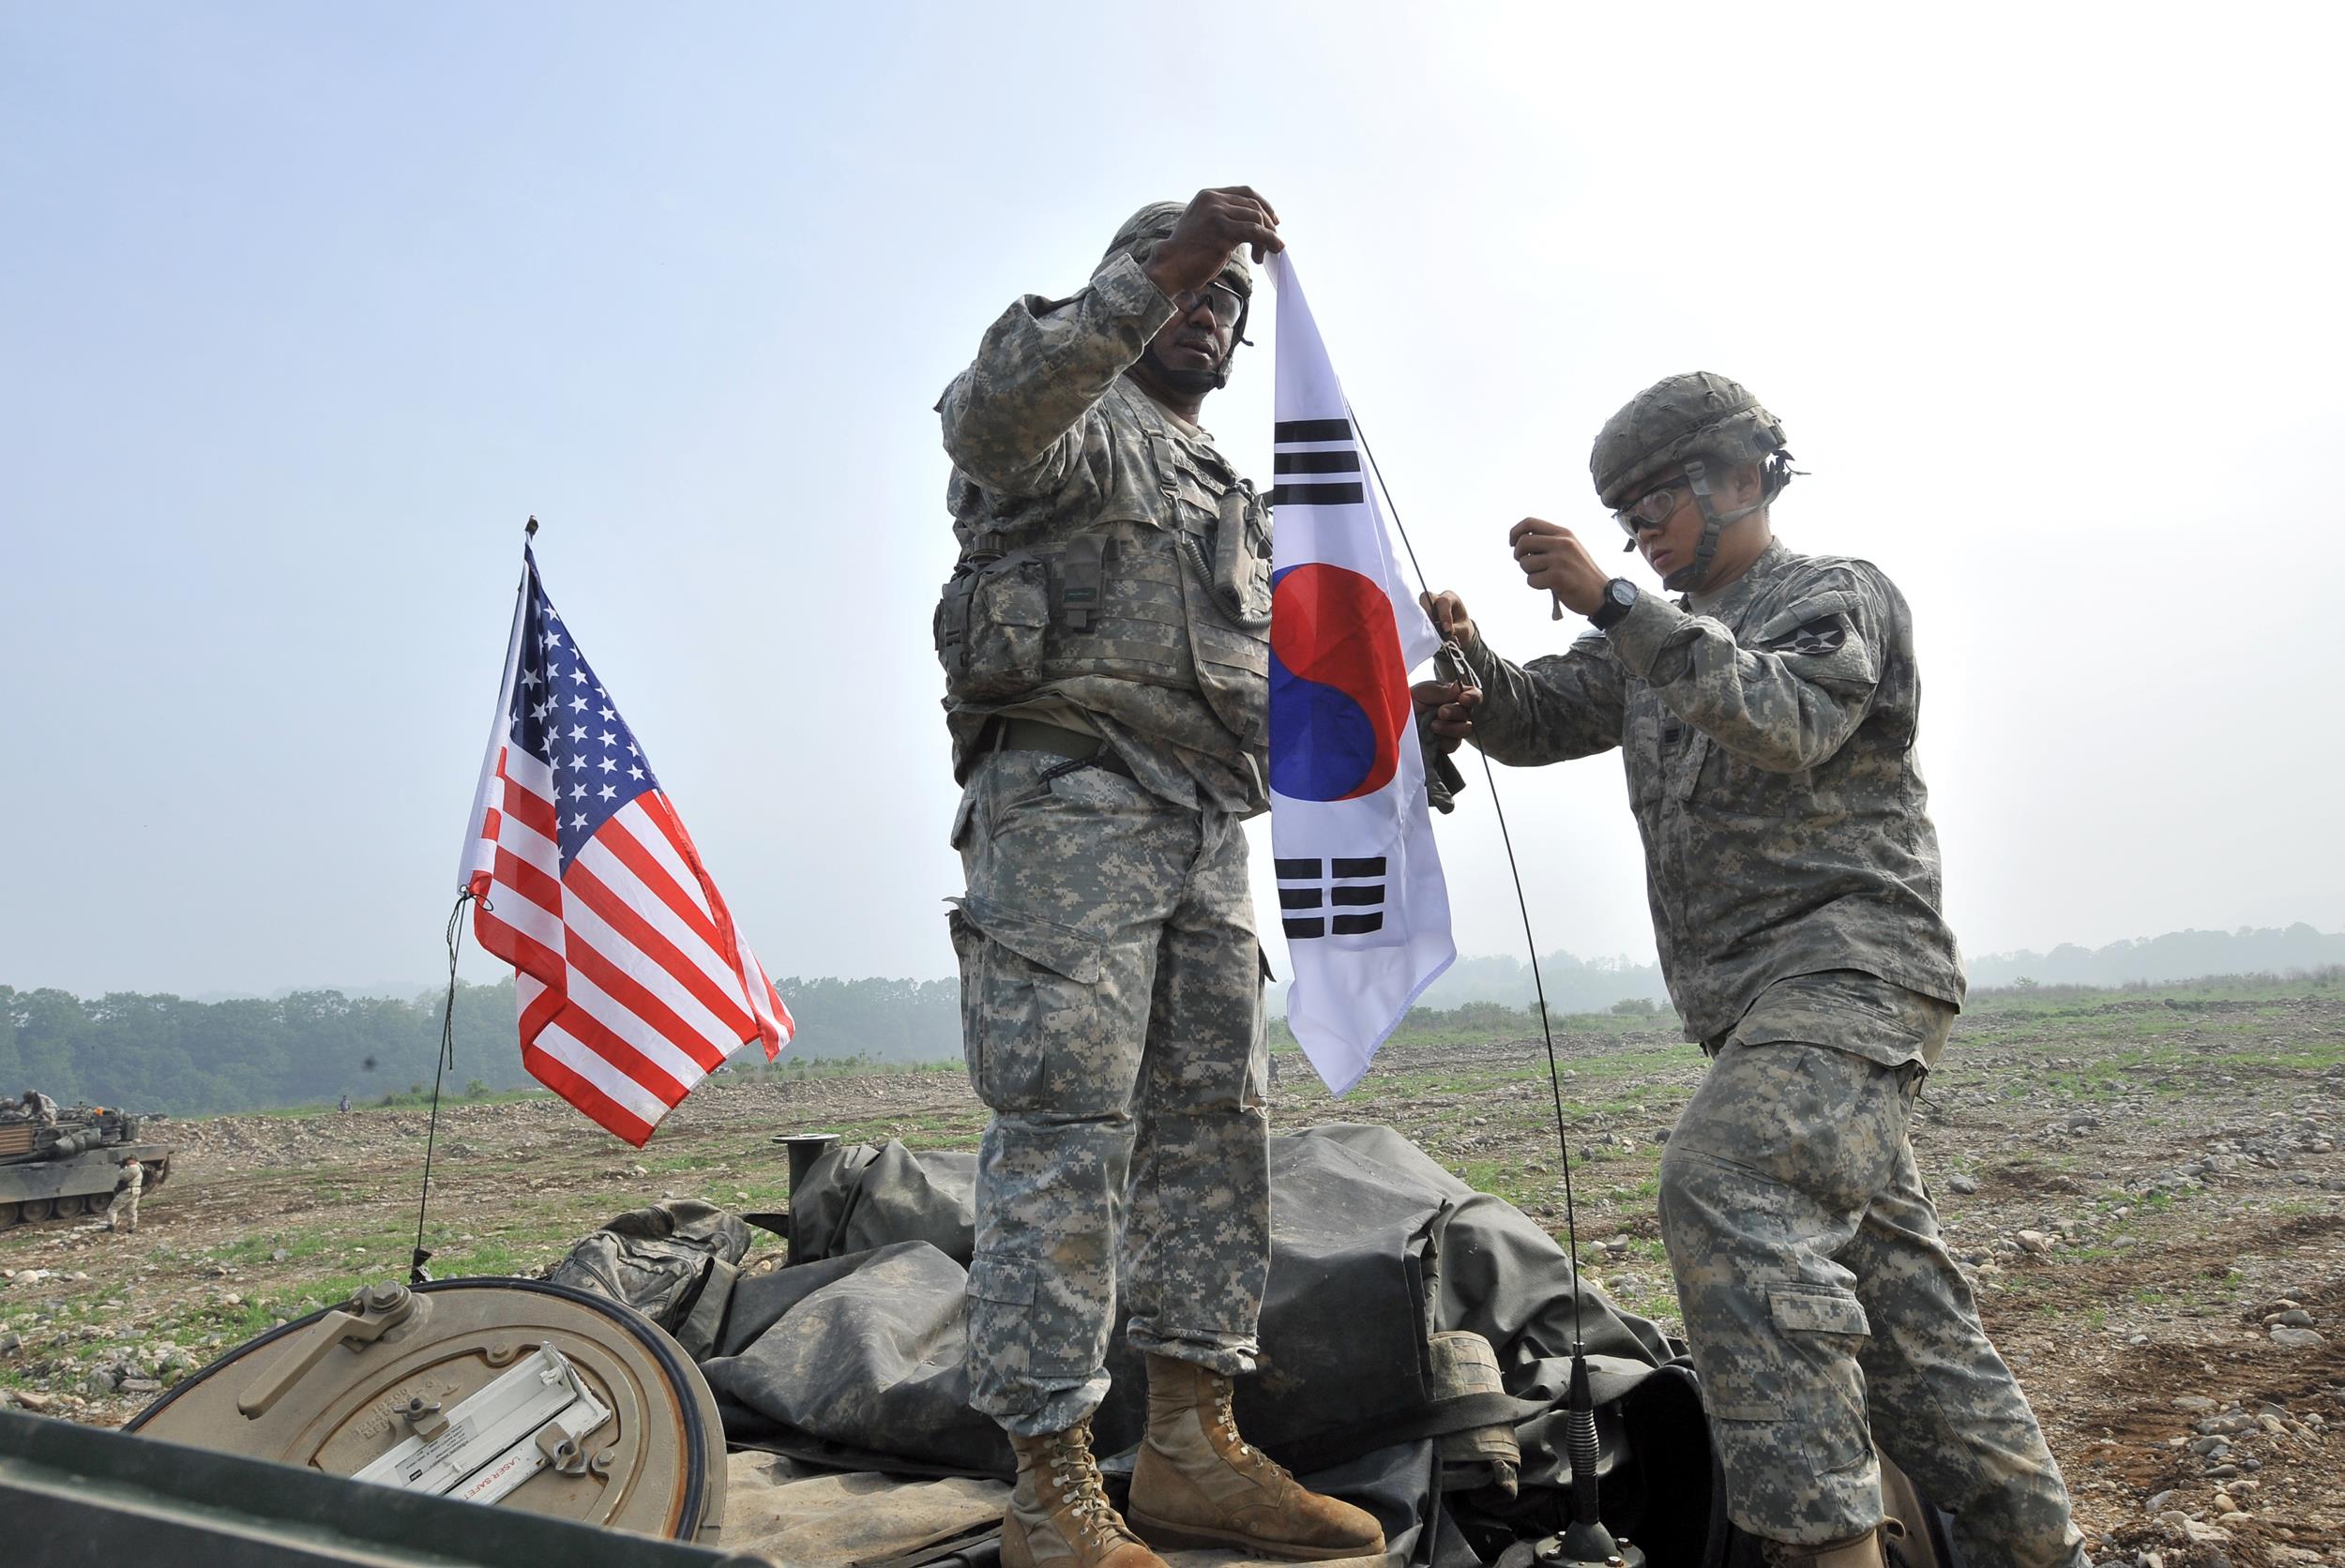 South Korea Wartime OPCON Transition: A Step Forward